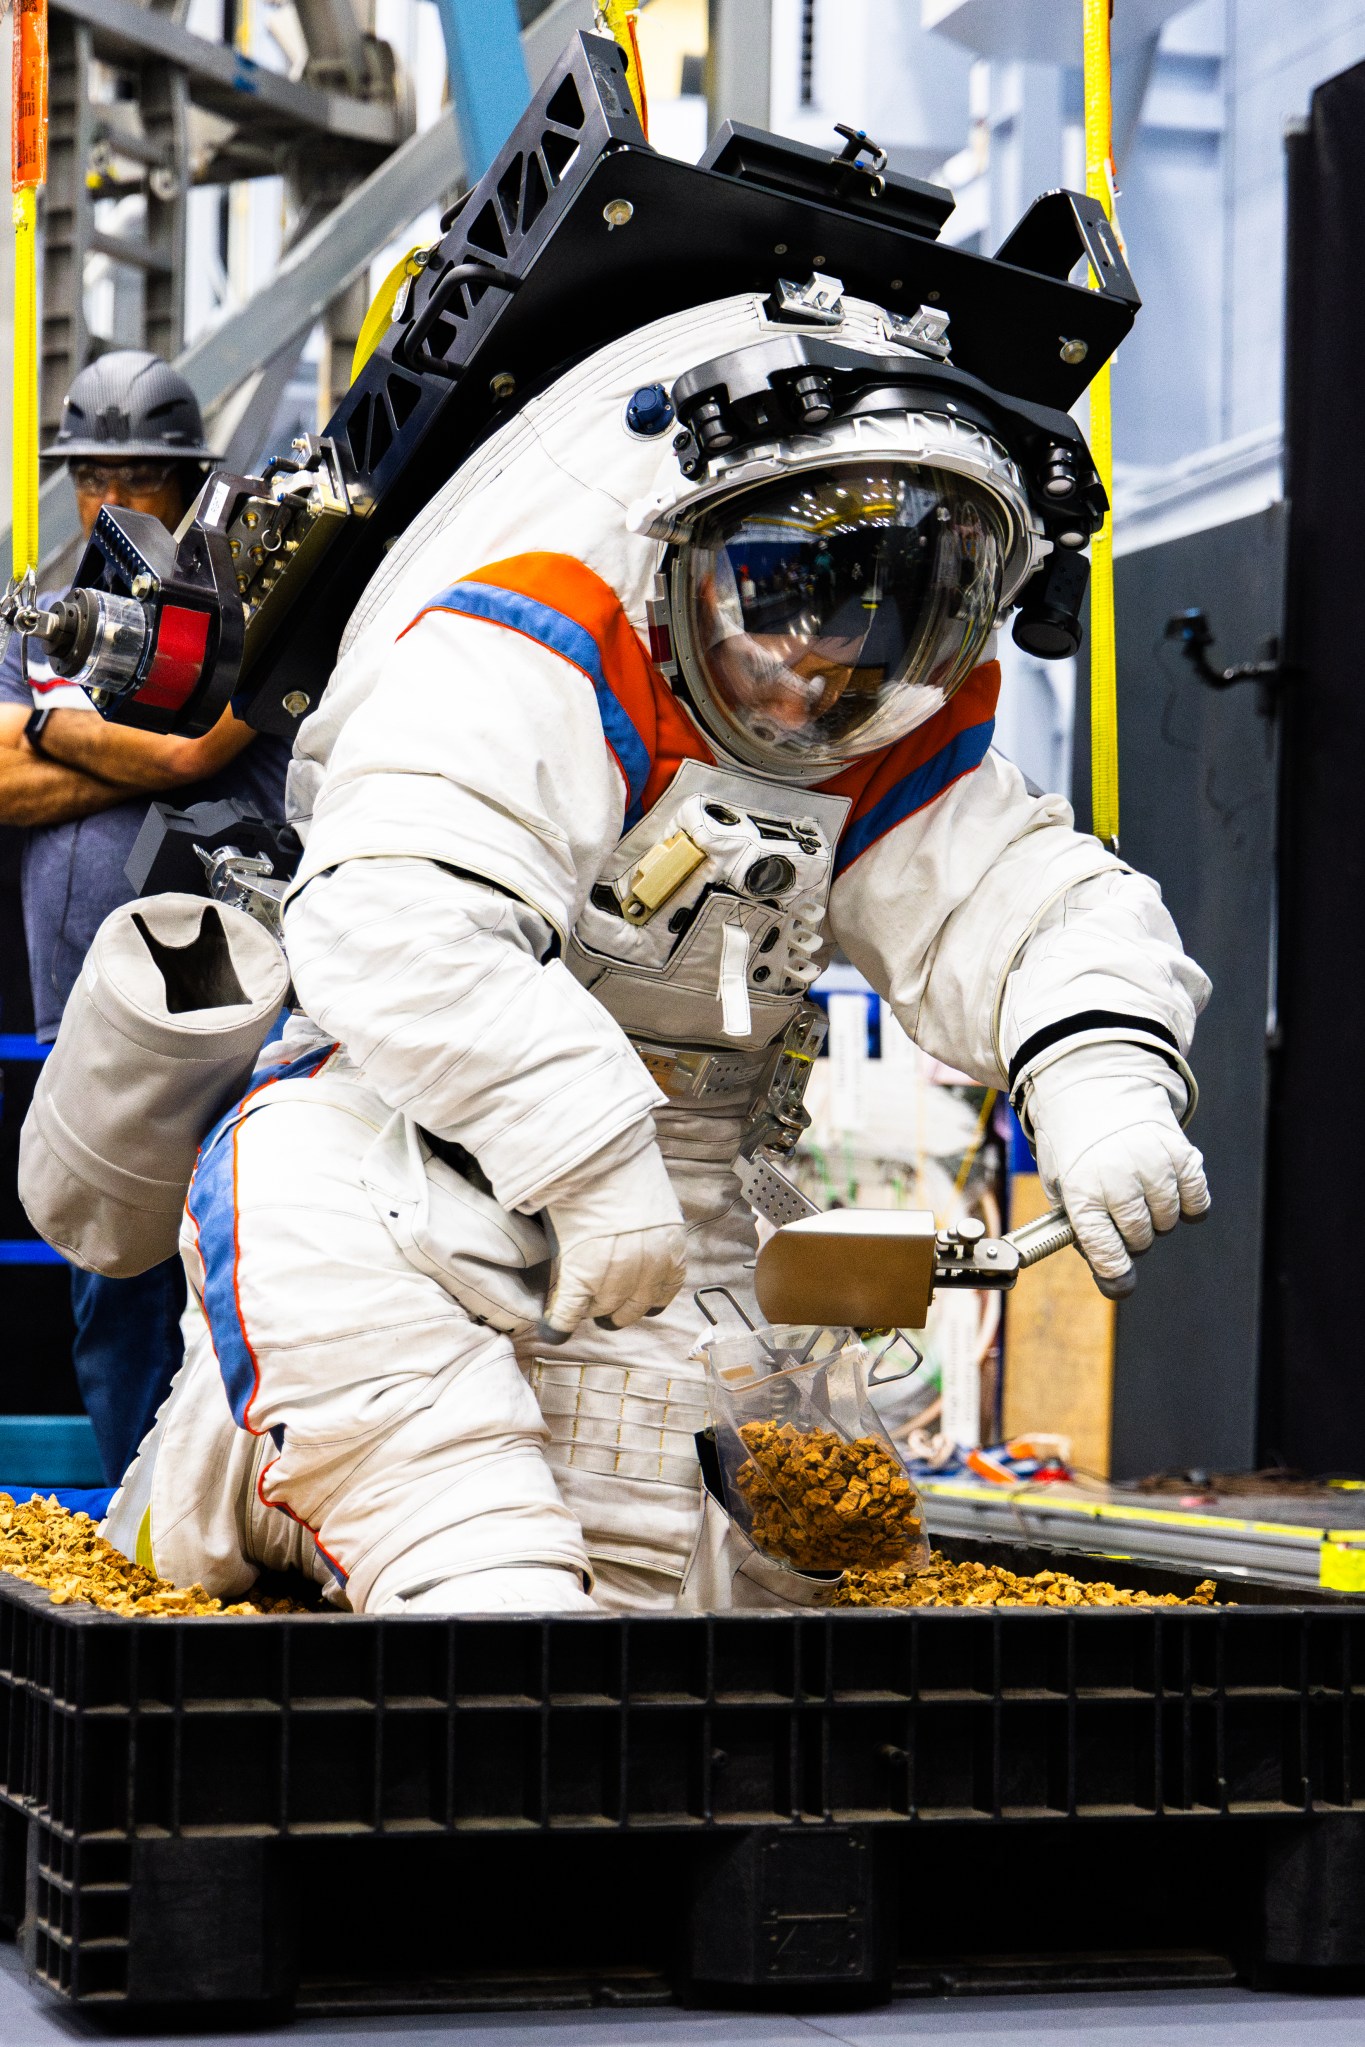 Axiom Space Tests Lunar Spacesuit at NASA's Johnson Space Center - NASA